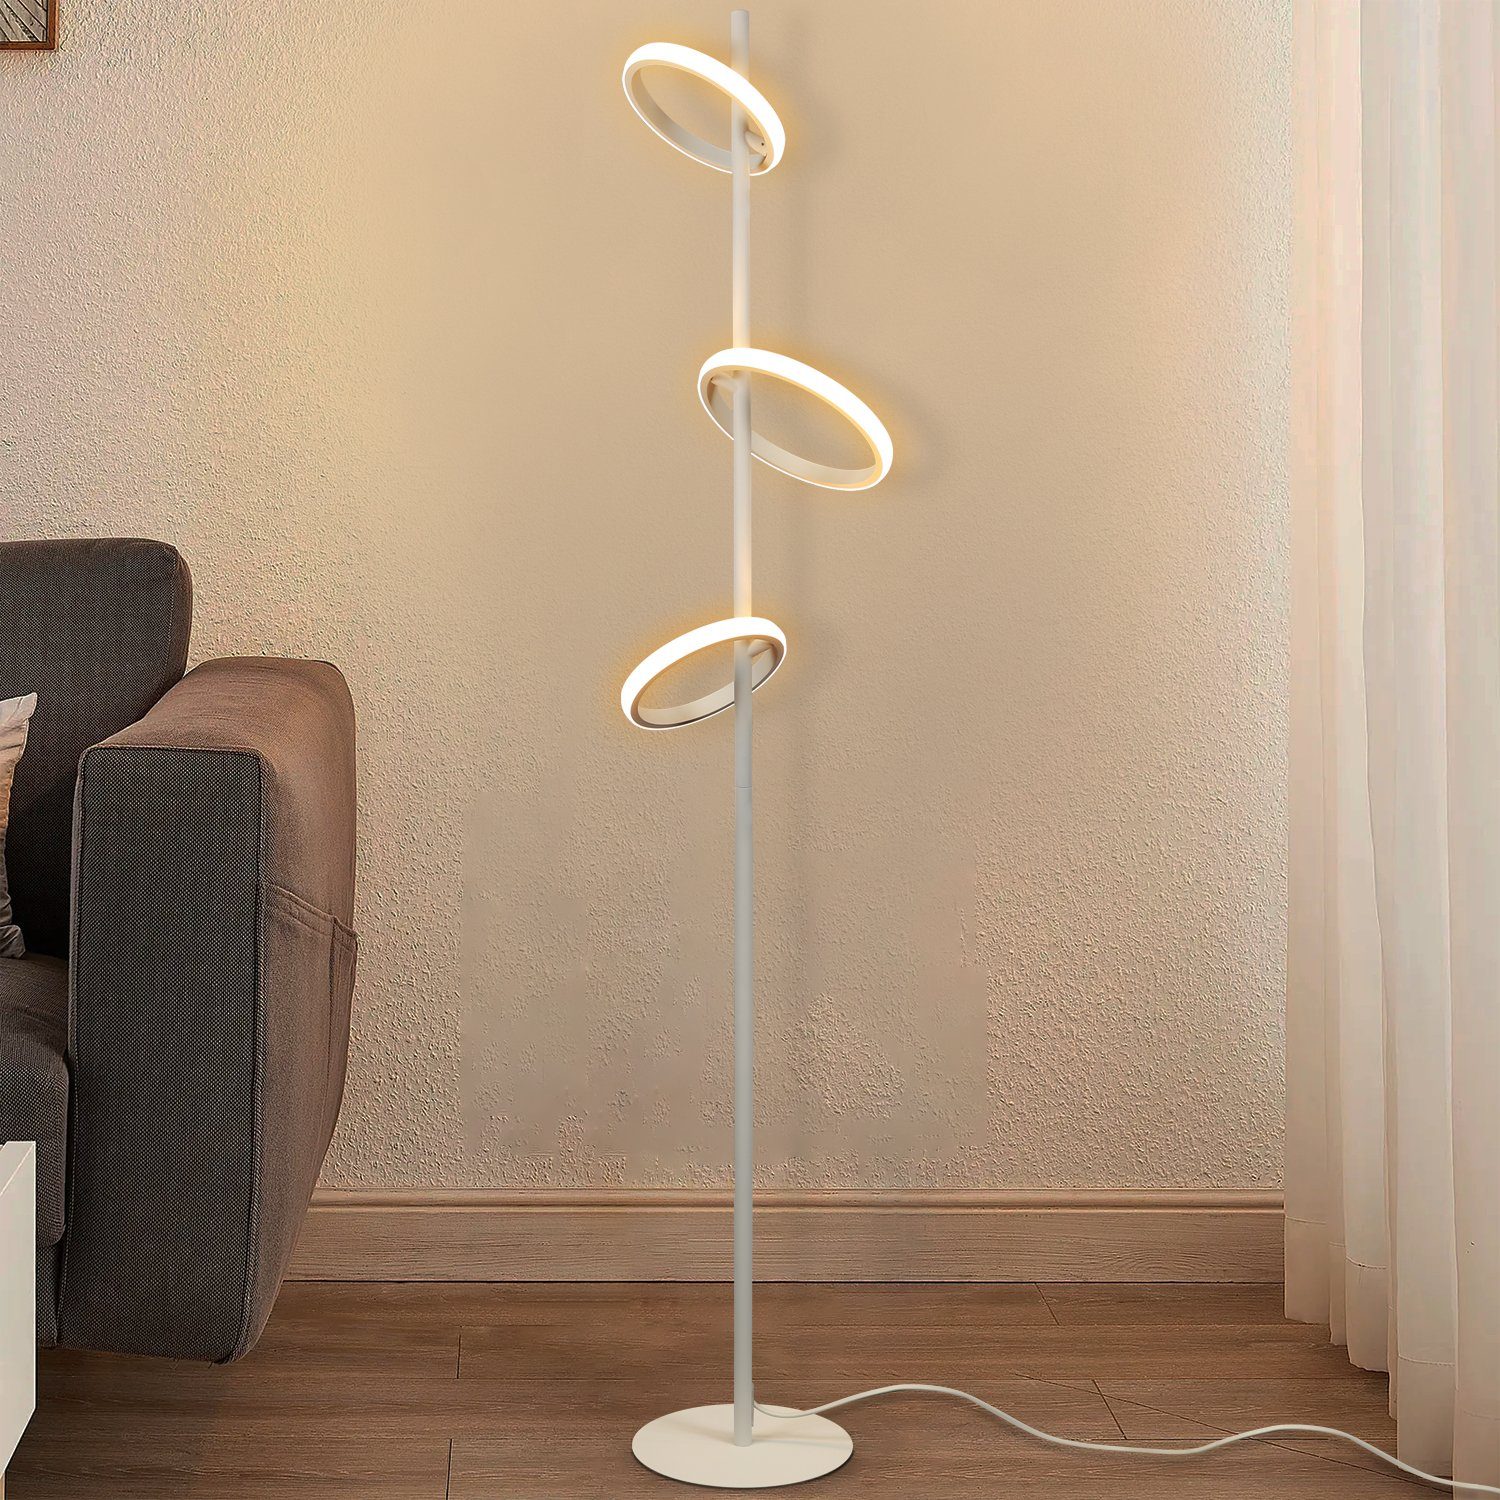 Stehlampe Leselampe 4 Watt LED Leuchte modern Aluminium Wohnzimmer Büro Lampe 